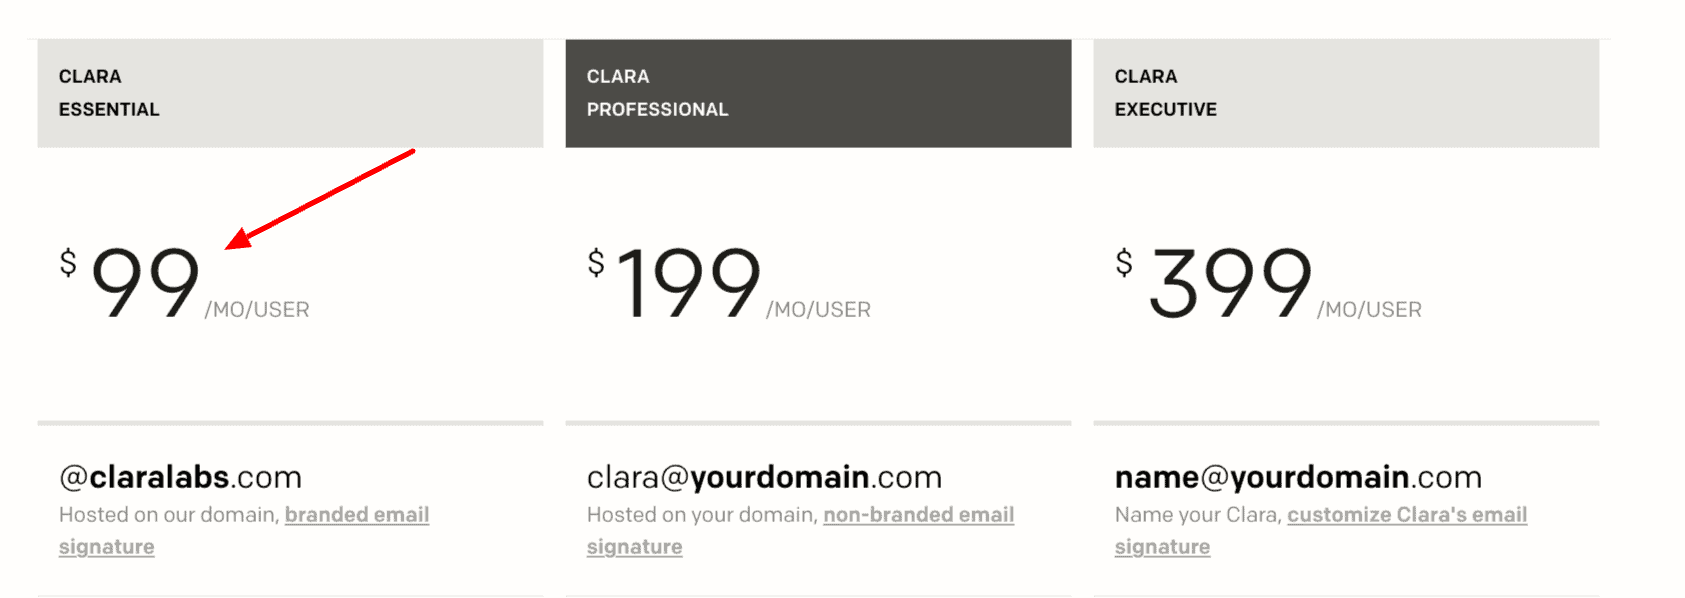 Clara - Pricing